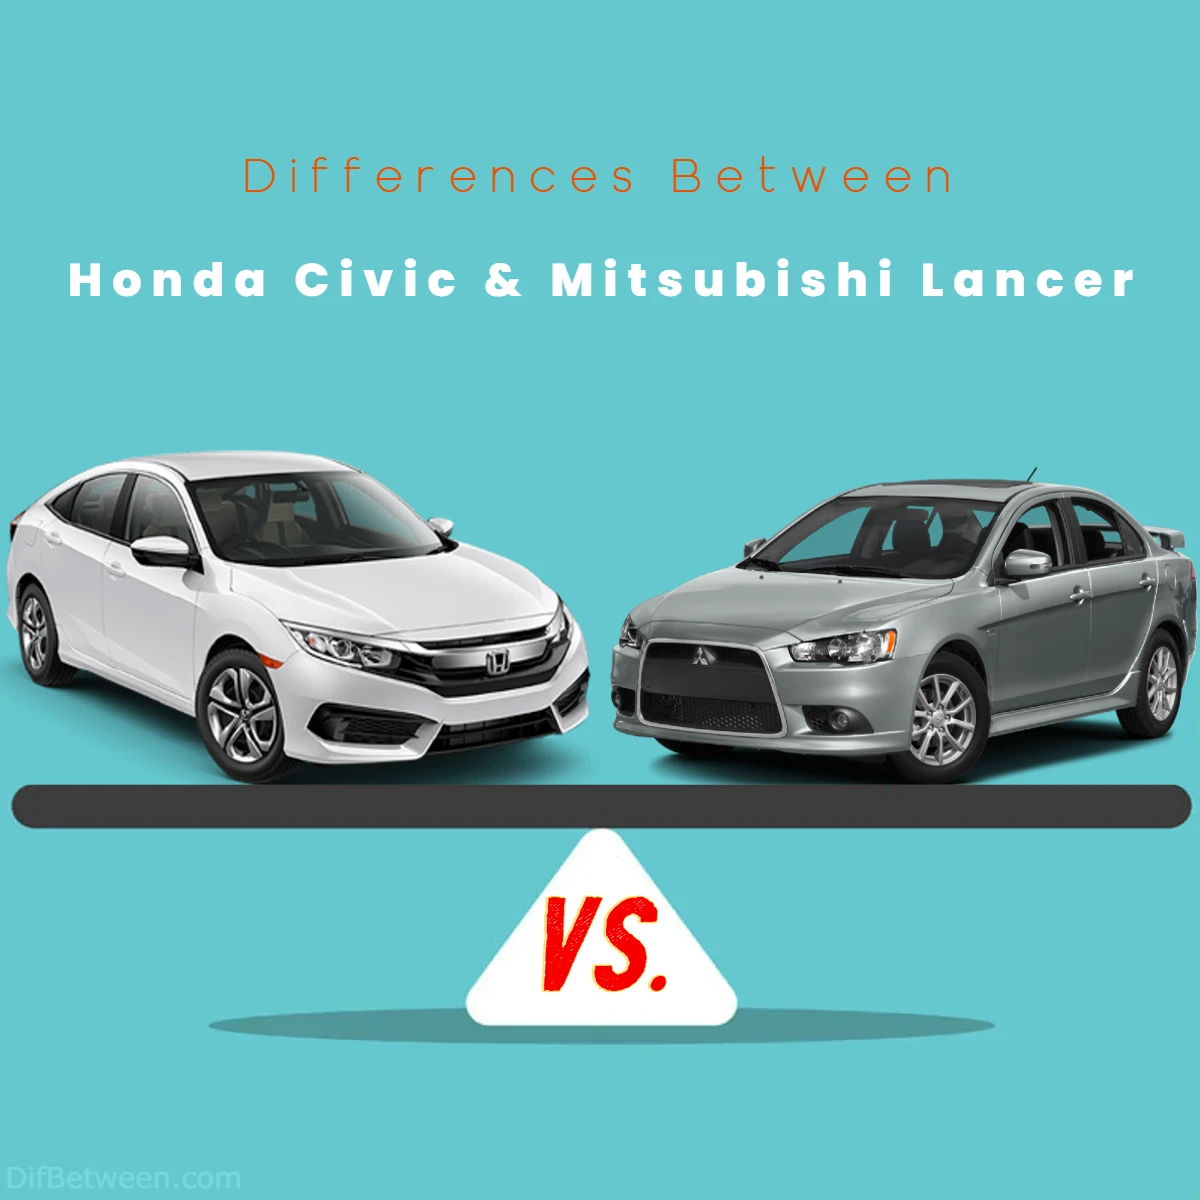 Differences Between Honda Civic vs Mitsubishi Lancer